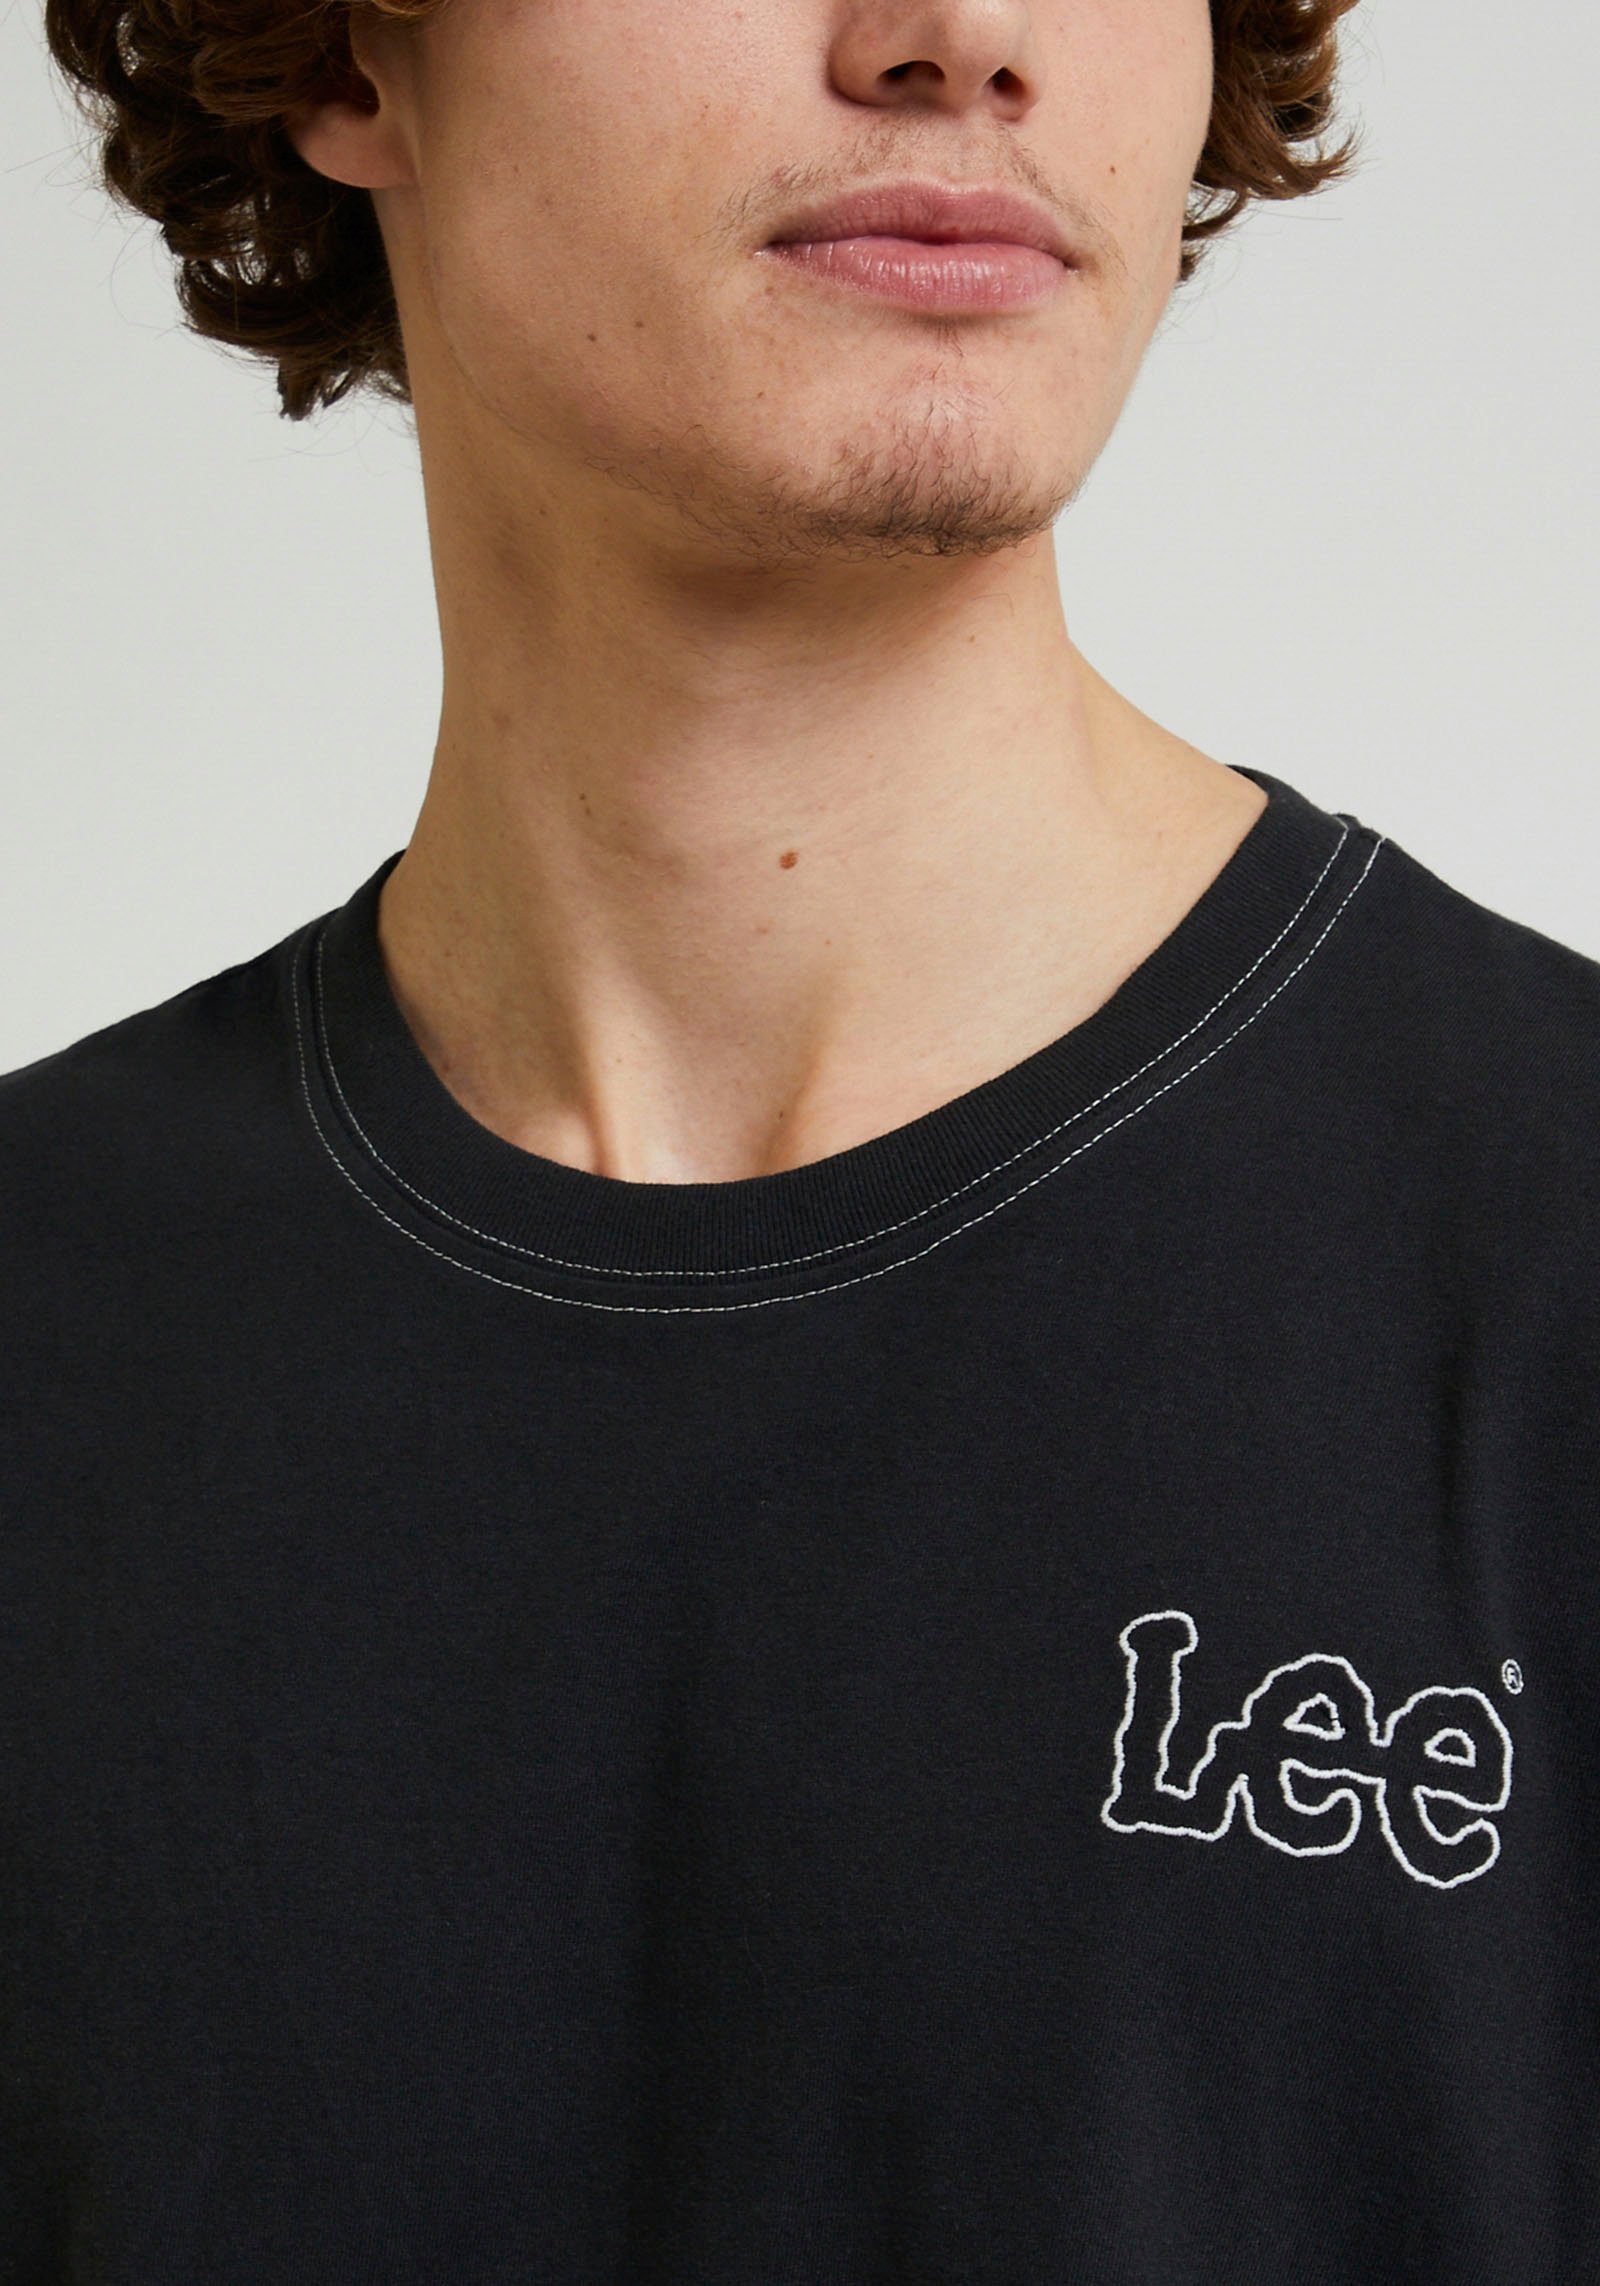 LOOSE Lee® T-Shirt